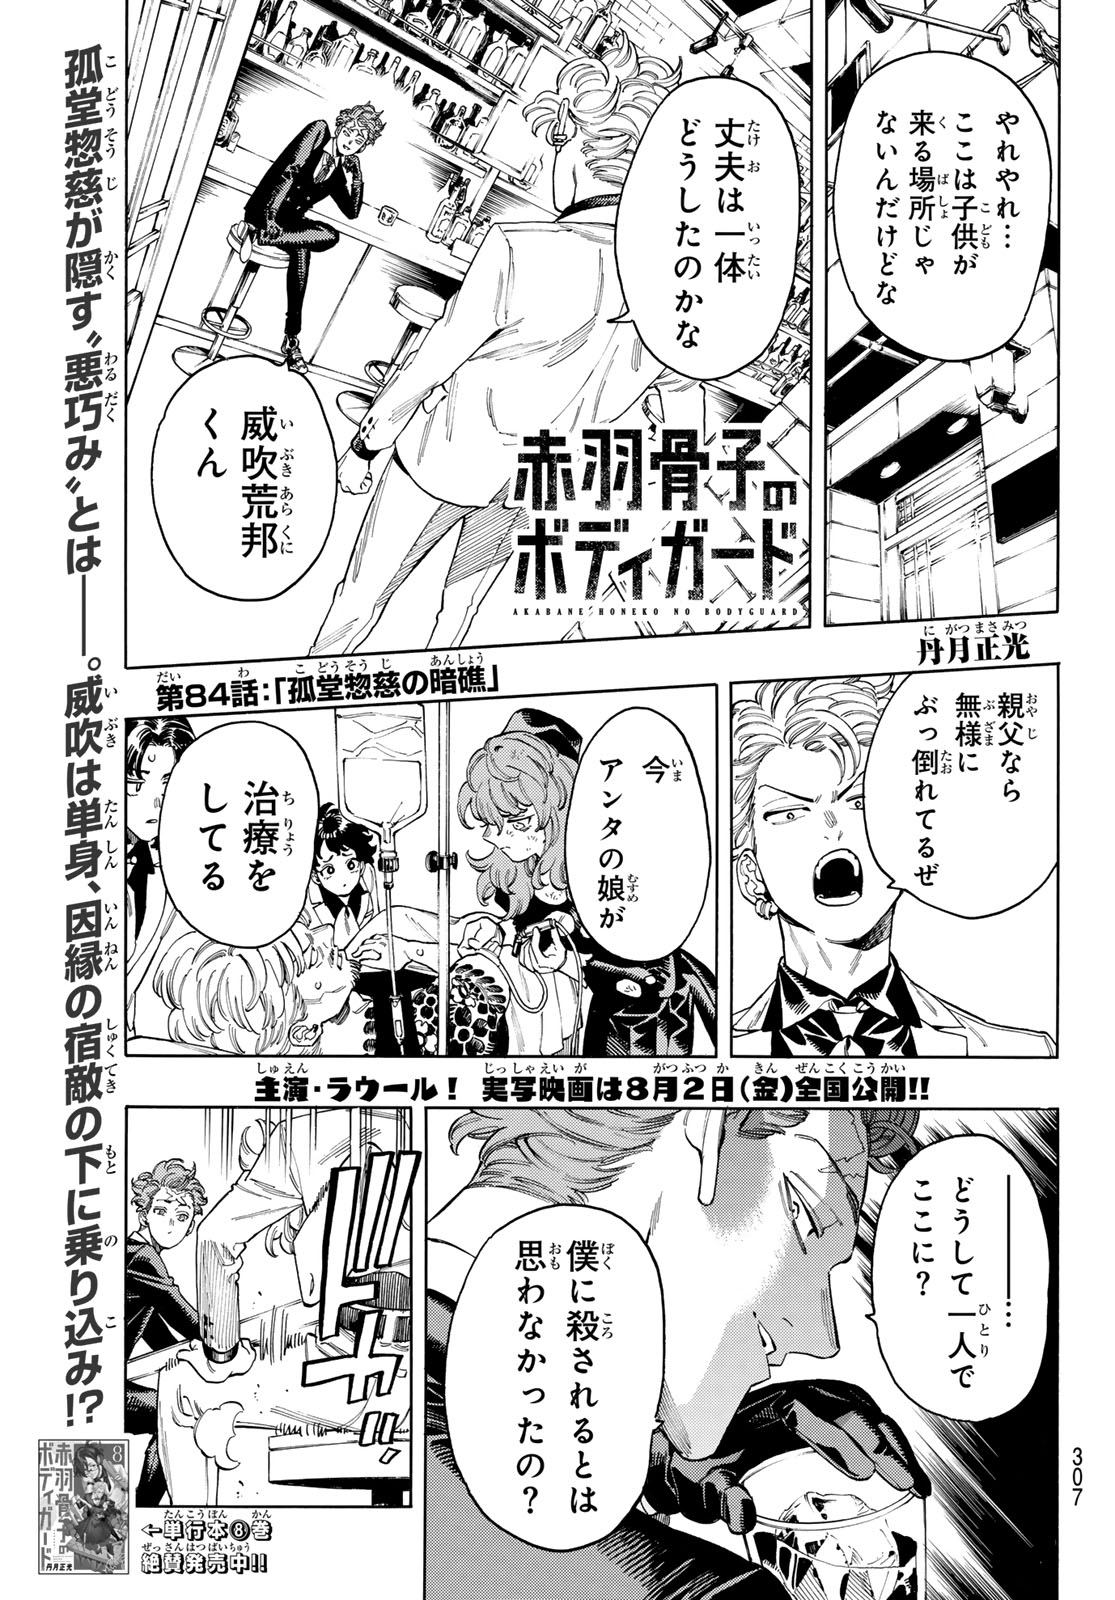 Akabane Honeko no Bodyguard - Chapter 84 - Page 1